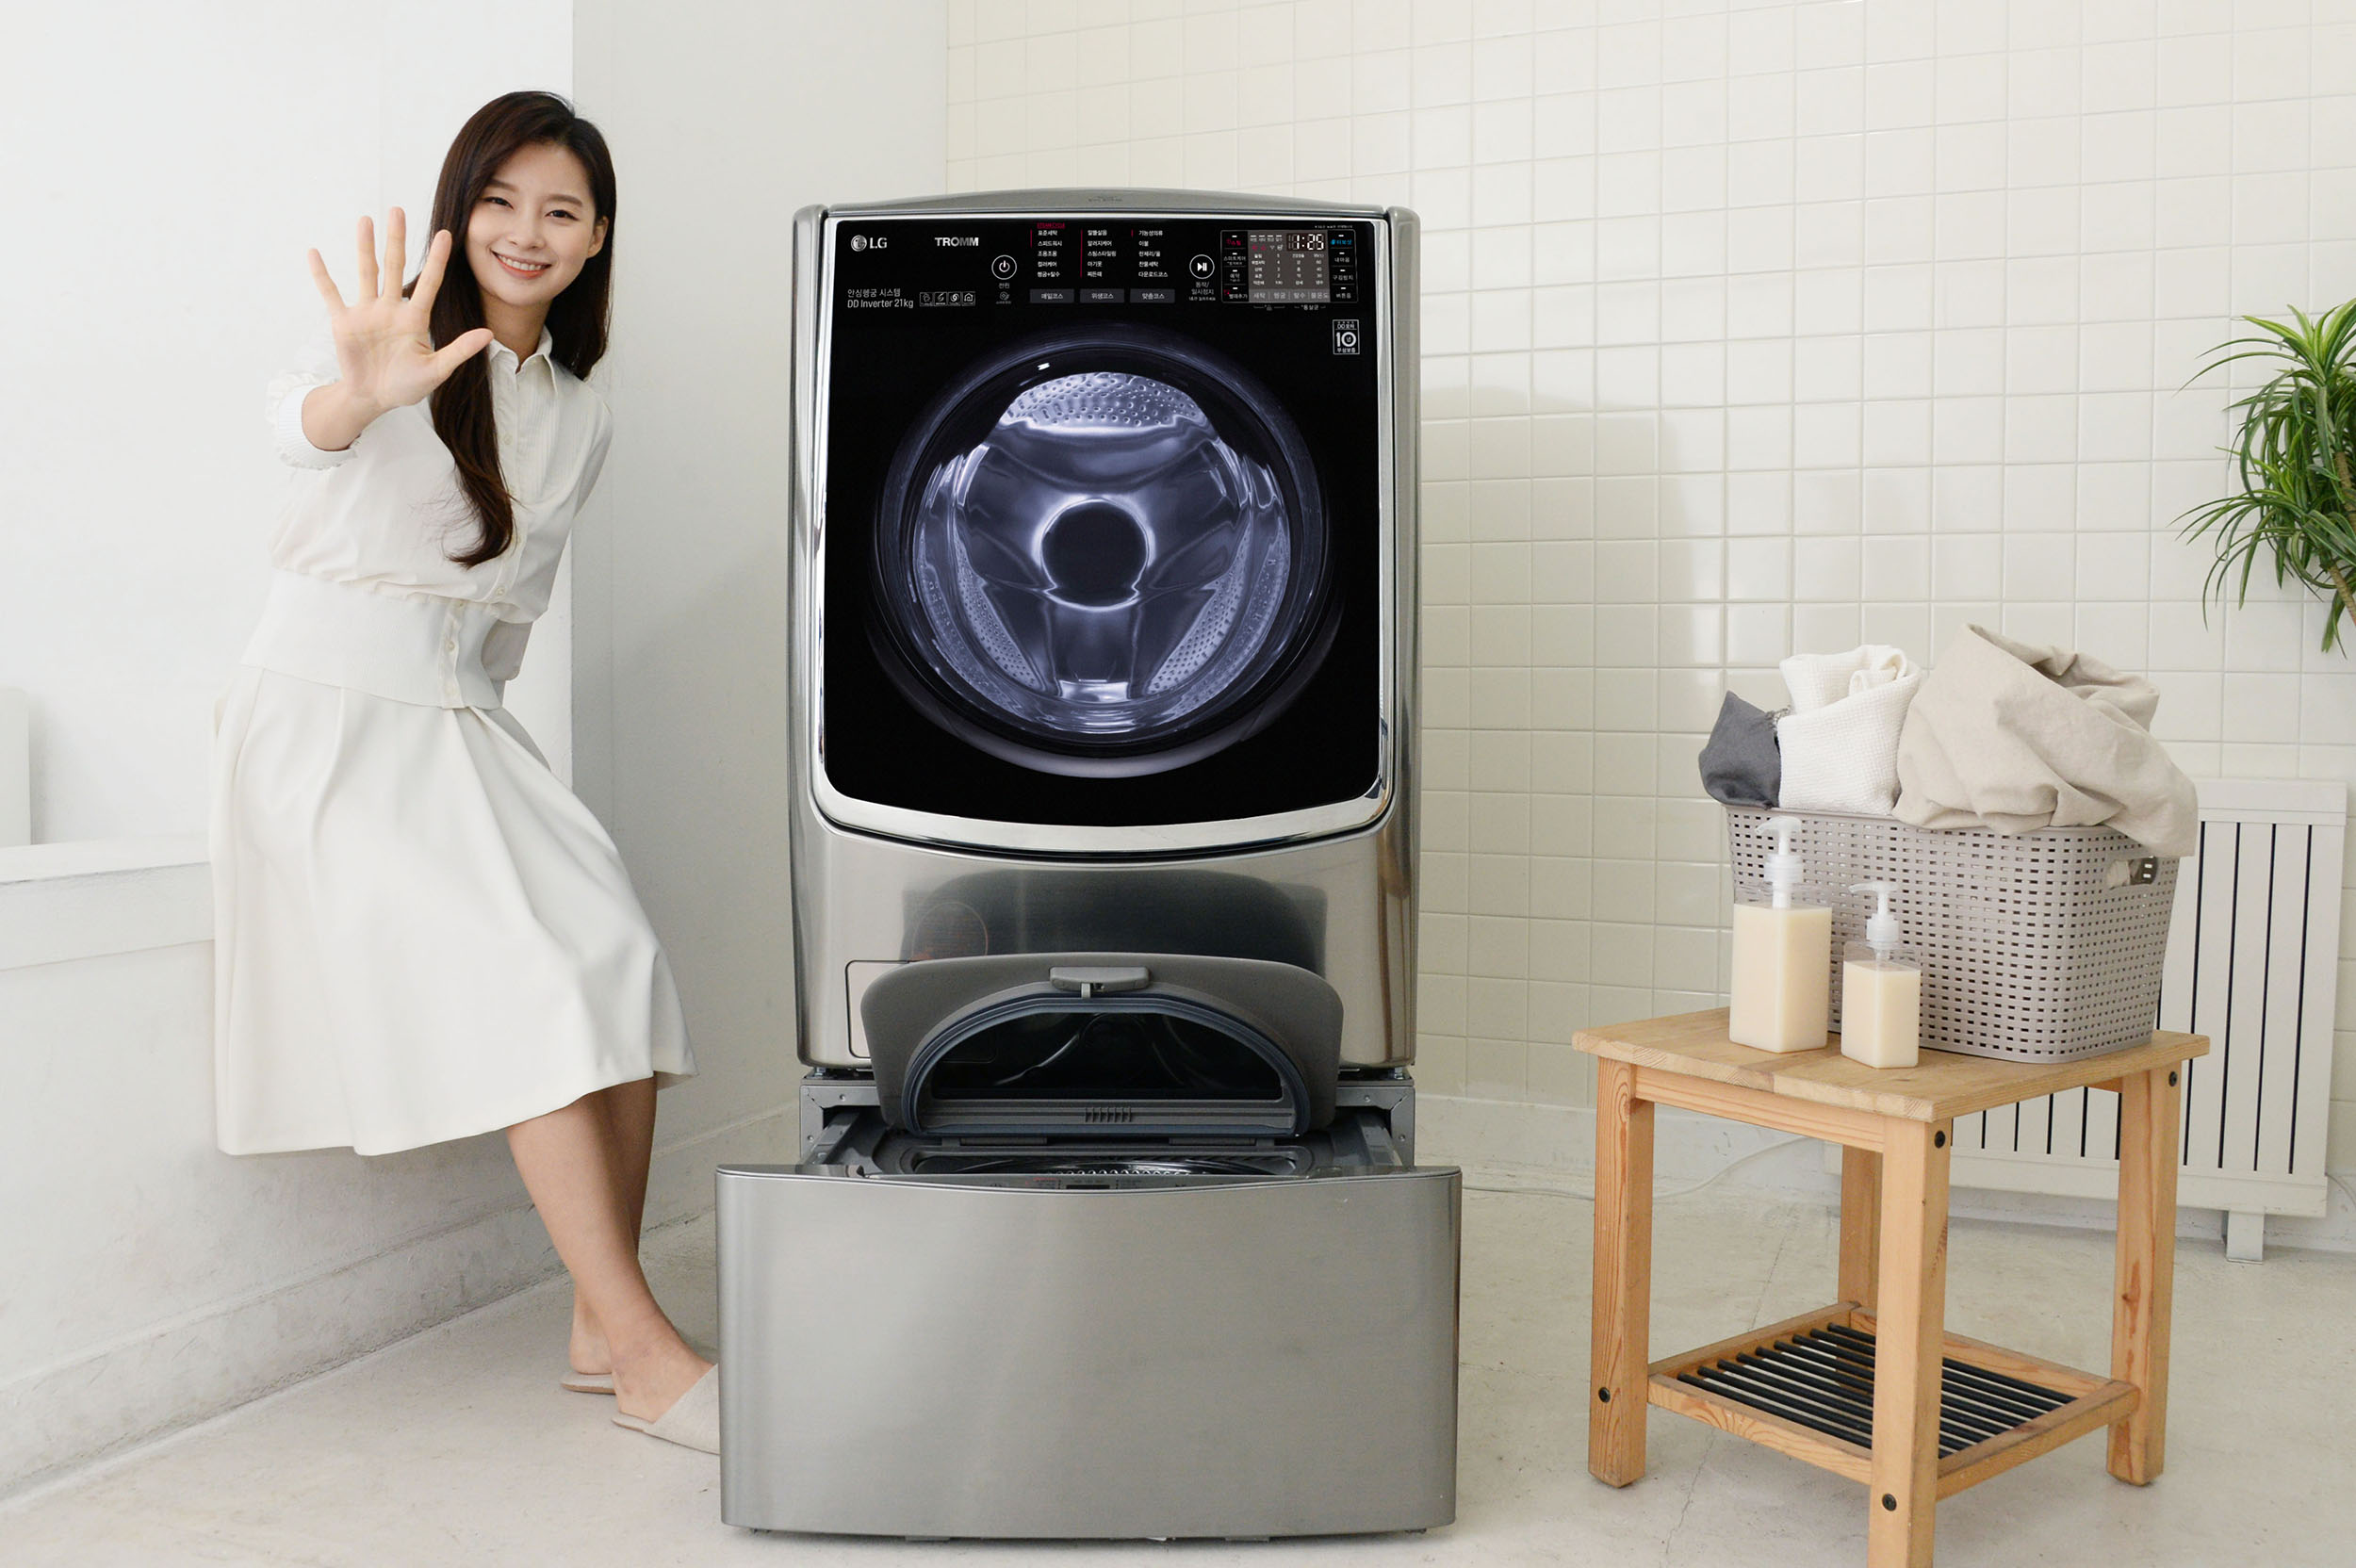 LG전자 모델이 1일 출시한 드럼세탁기 신제품 ‘트롬 플러스’ 하단에 4㎏ 용량 통돌이 세탁기 ‘트롬 미니워시’를 결합한 ‘트롬 트윈워시’를 소개하고 있다. LG전자 제공